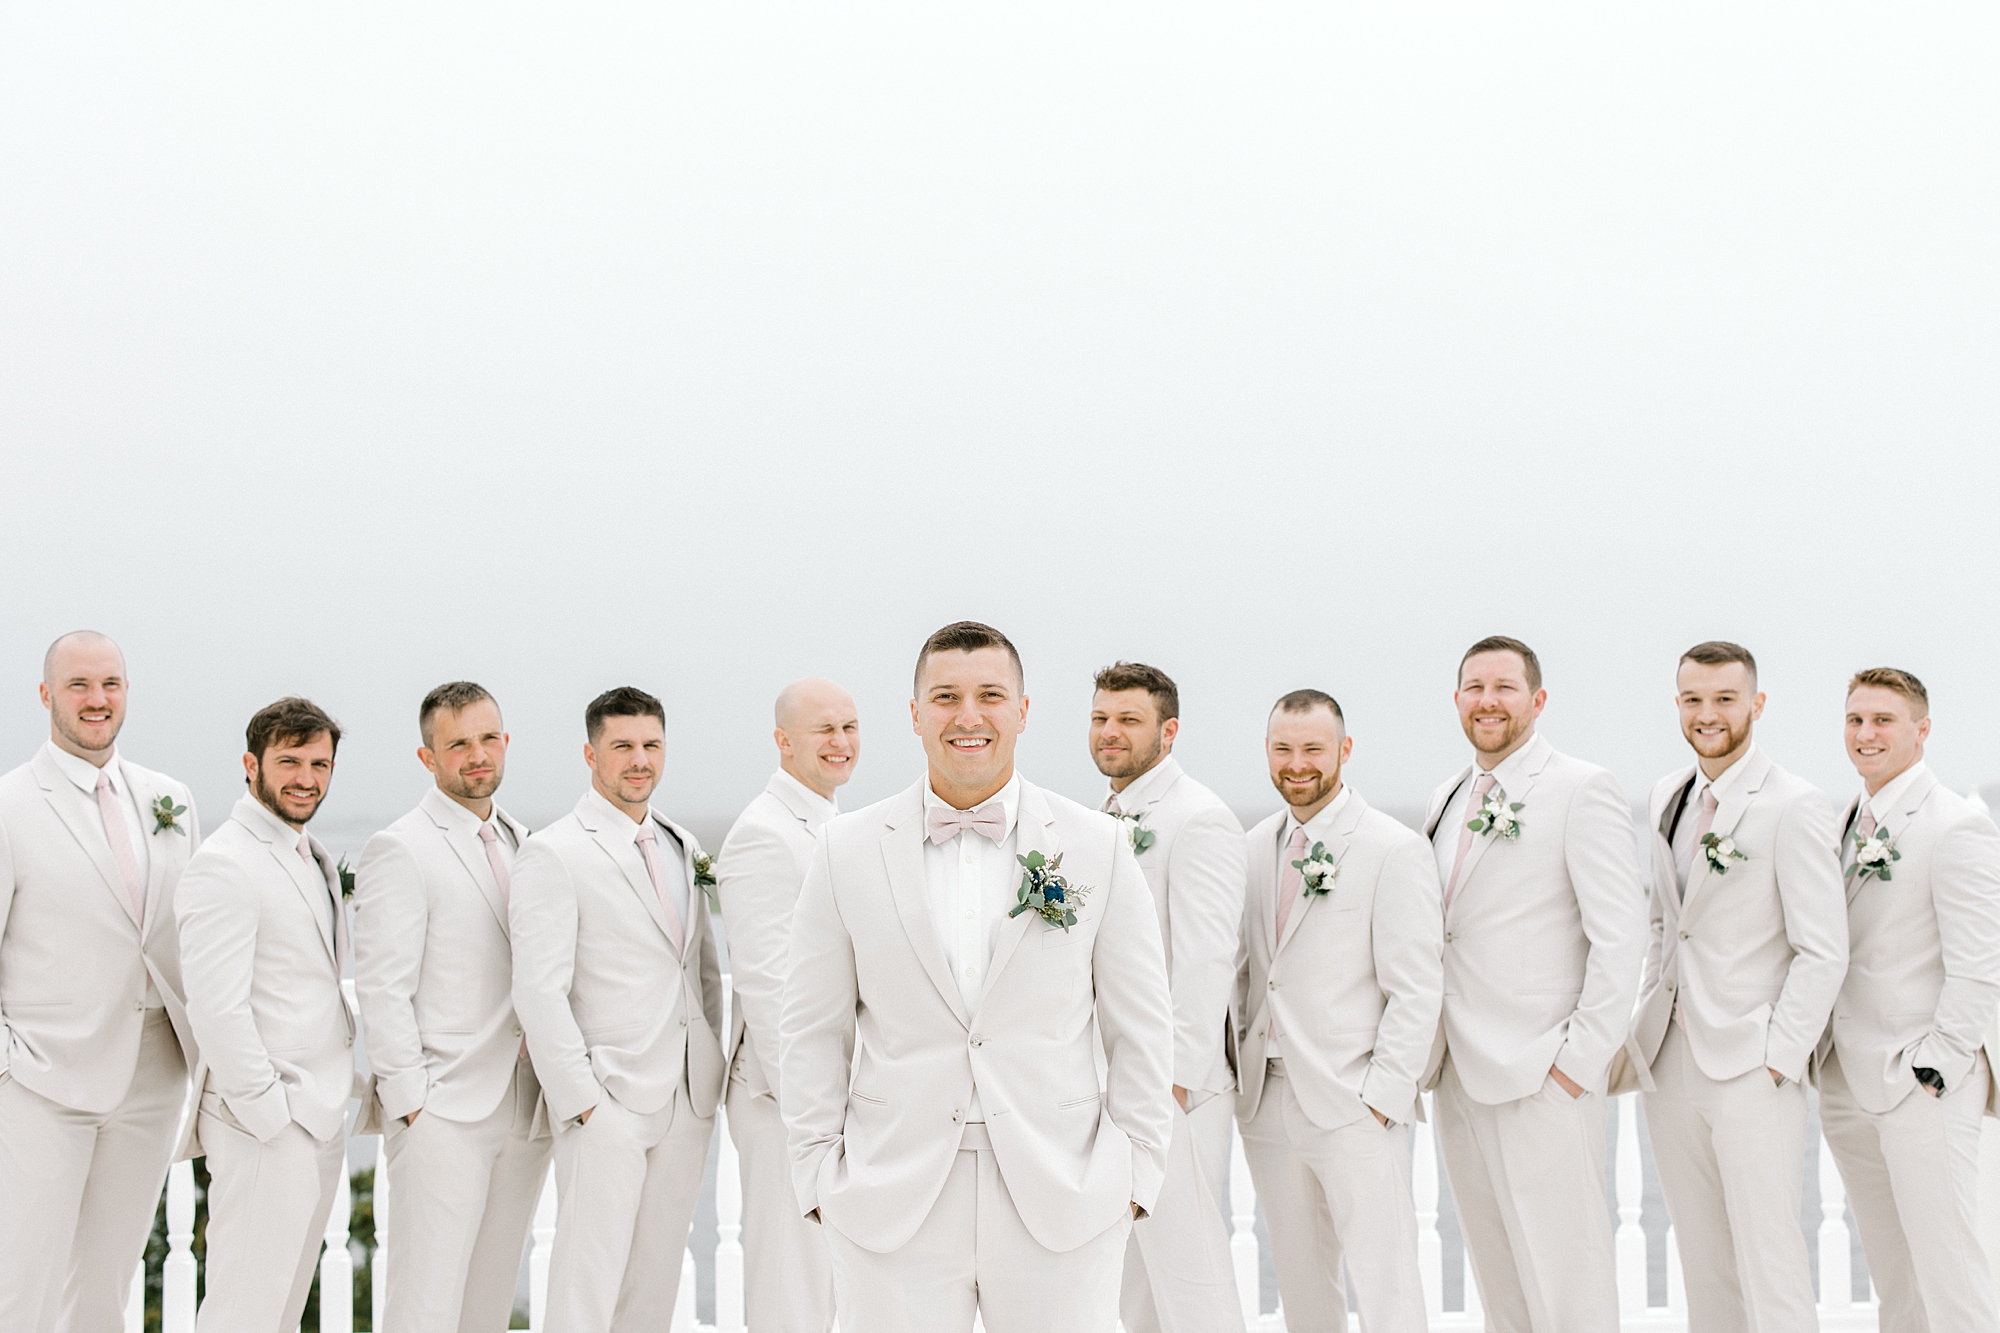 groom stands with groomsmen behind him in tusk suits